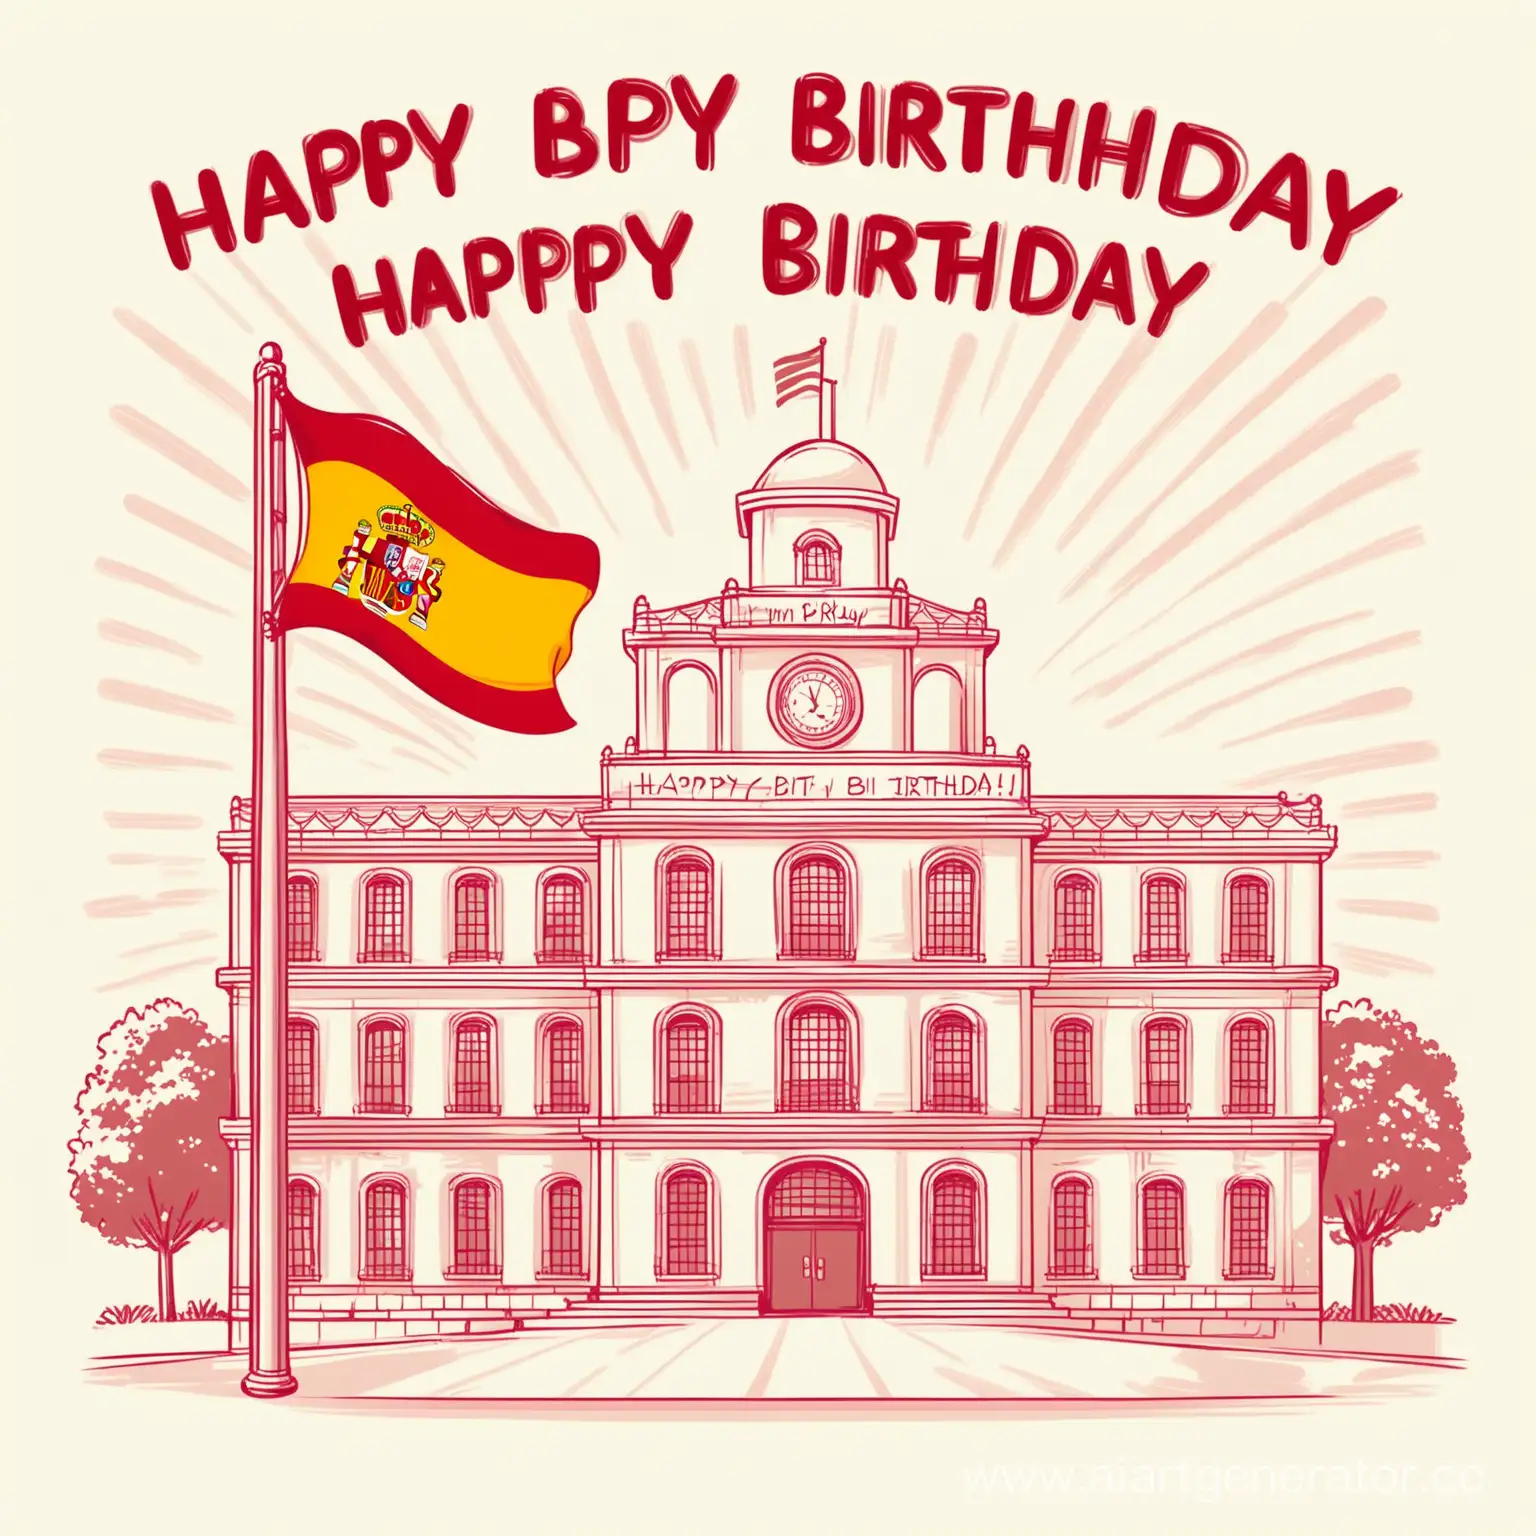 Celebrating-Spanish-Heritage-Birthday-Wishes-at-a-Cartoon-School